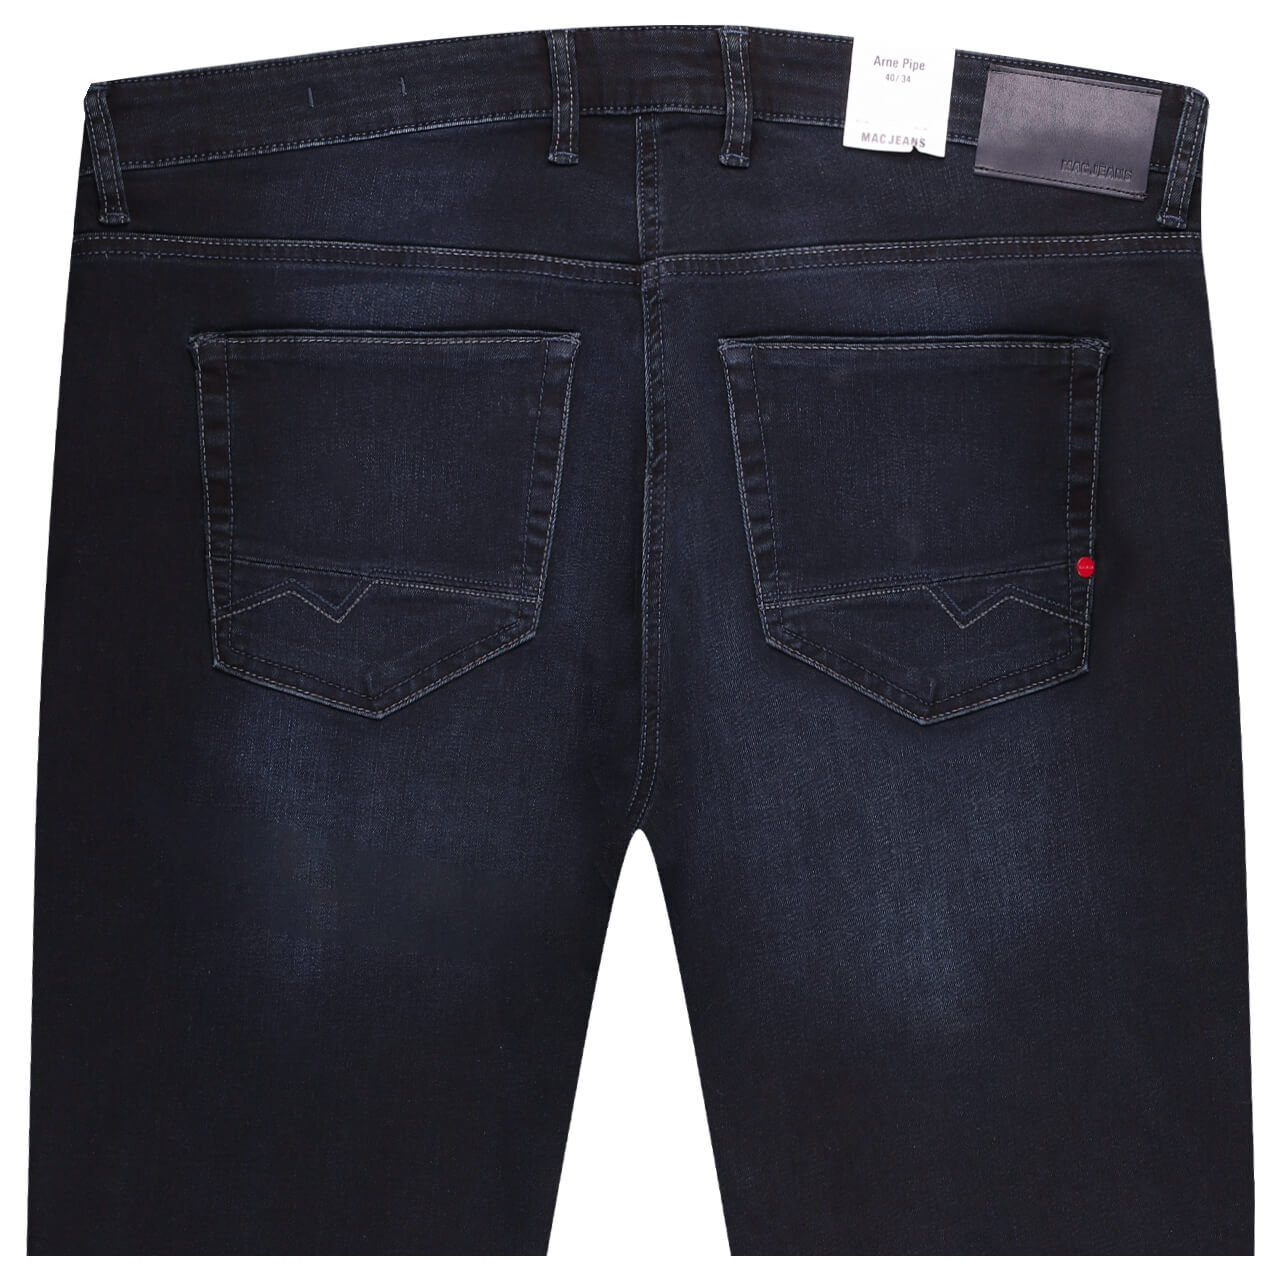 MAC Arne Pipe Flexx Jeans blue black washed